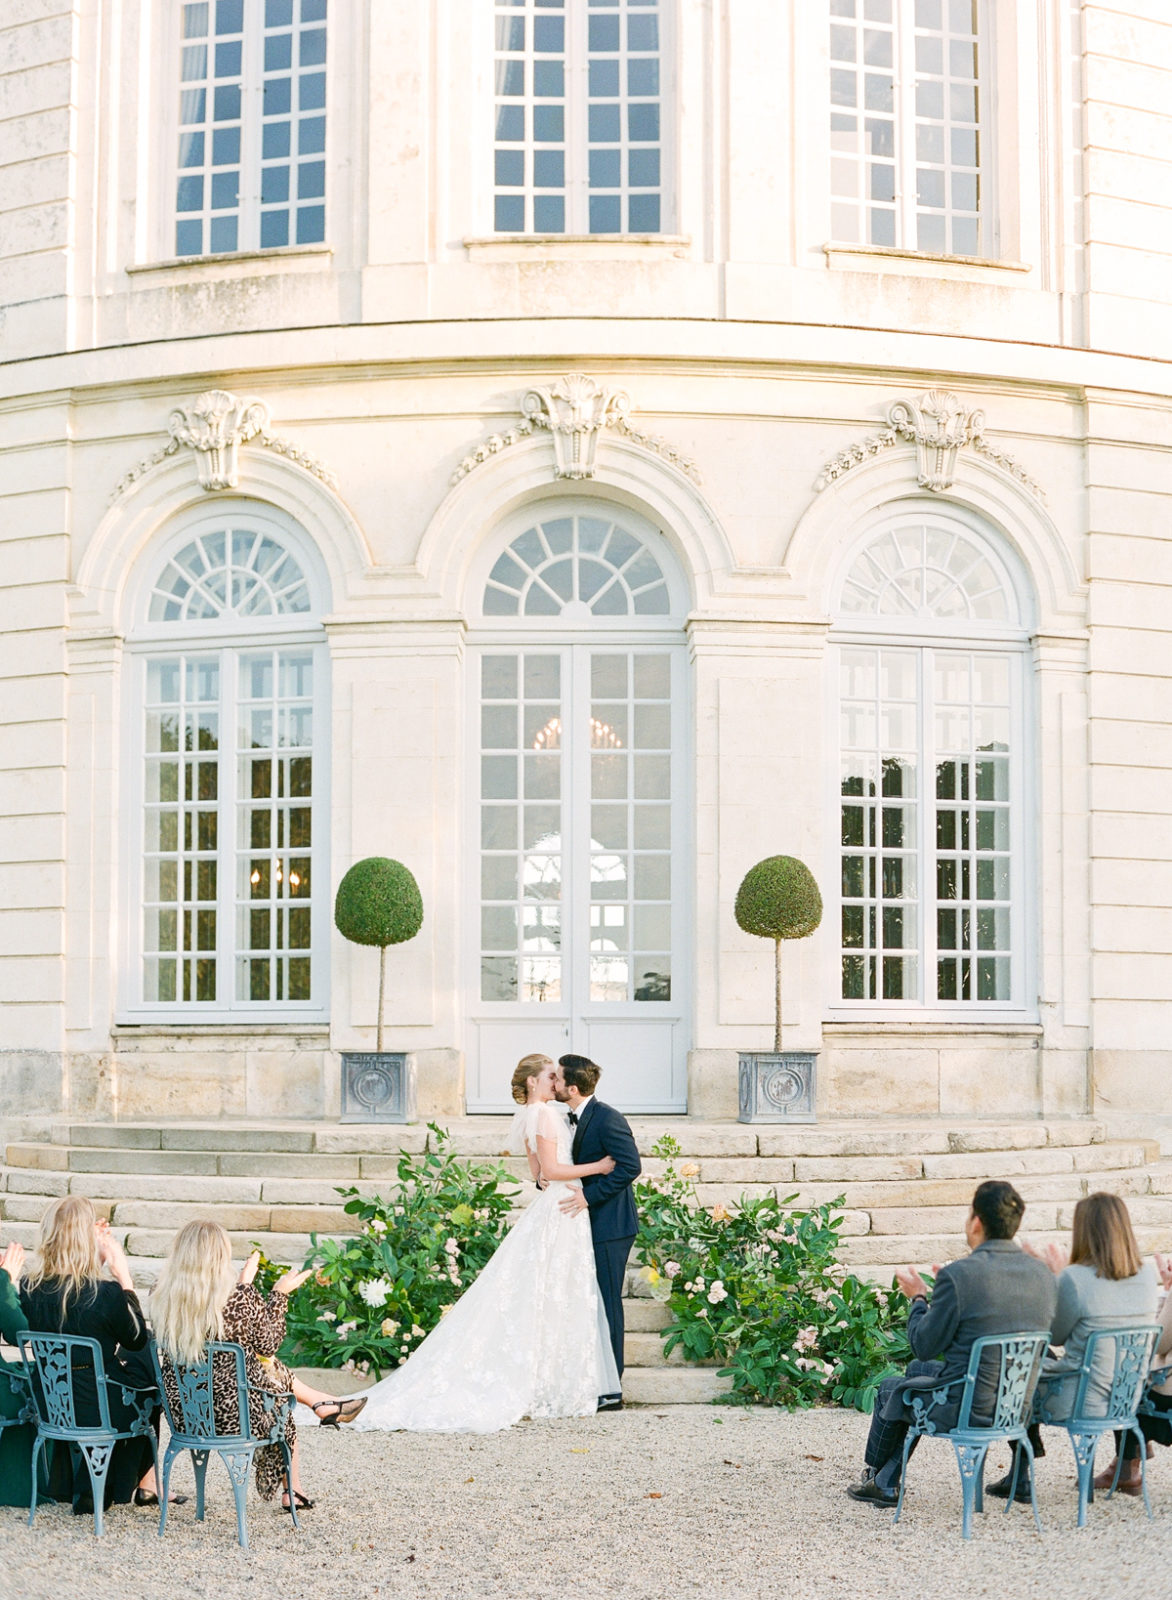 Chateau Grand Luce Wedding Photographer | Molly Carr Photography | France Luxury Destination Wedding | Paris Film Photographer | Rachael Ellen Events